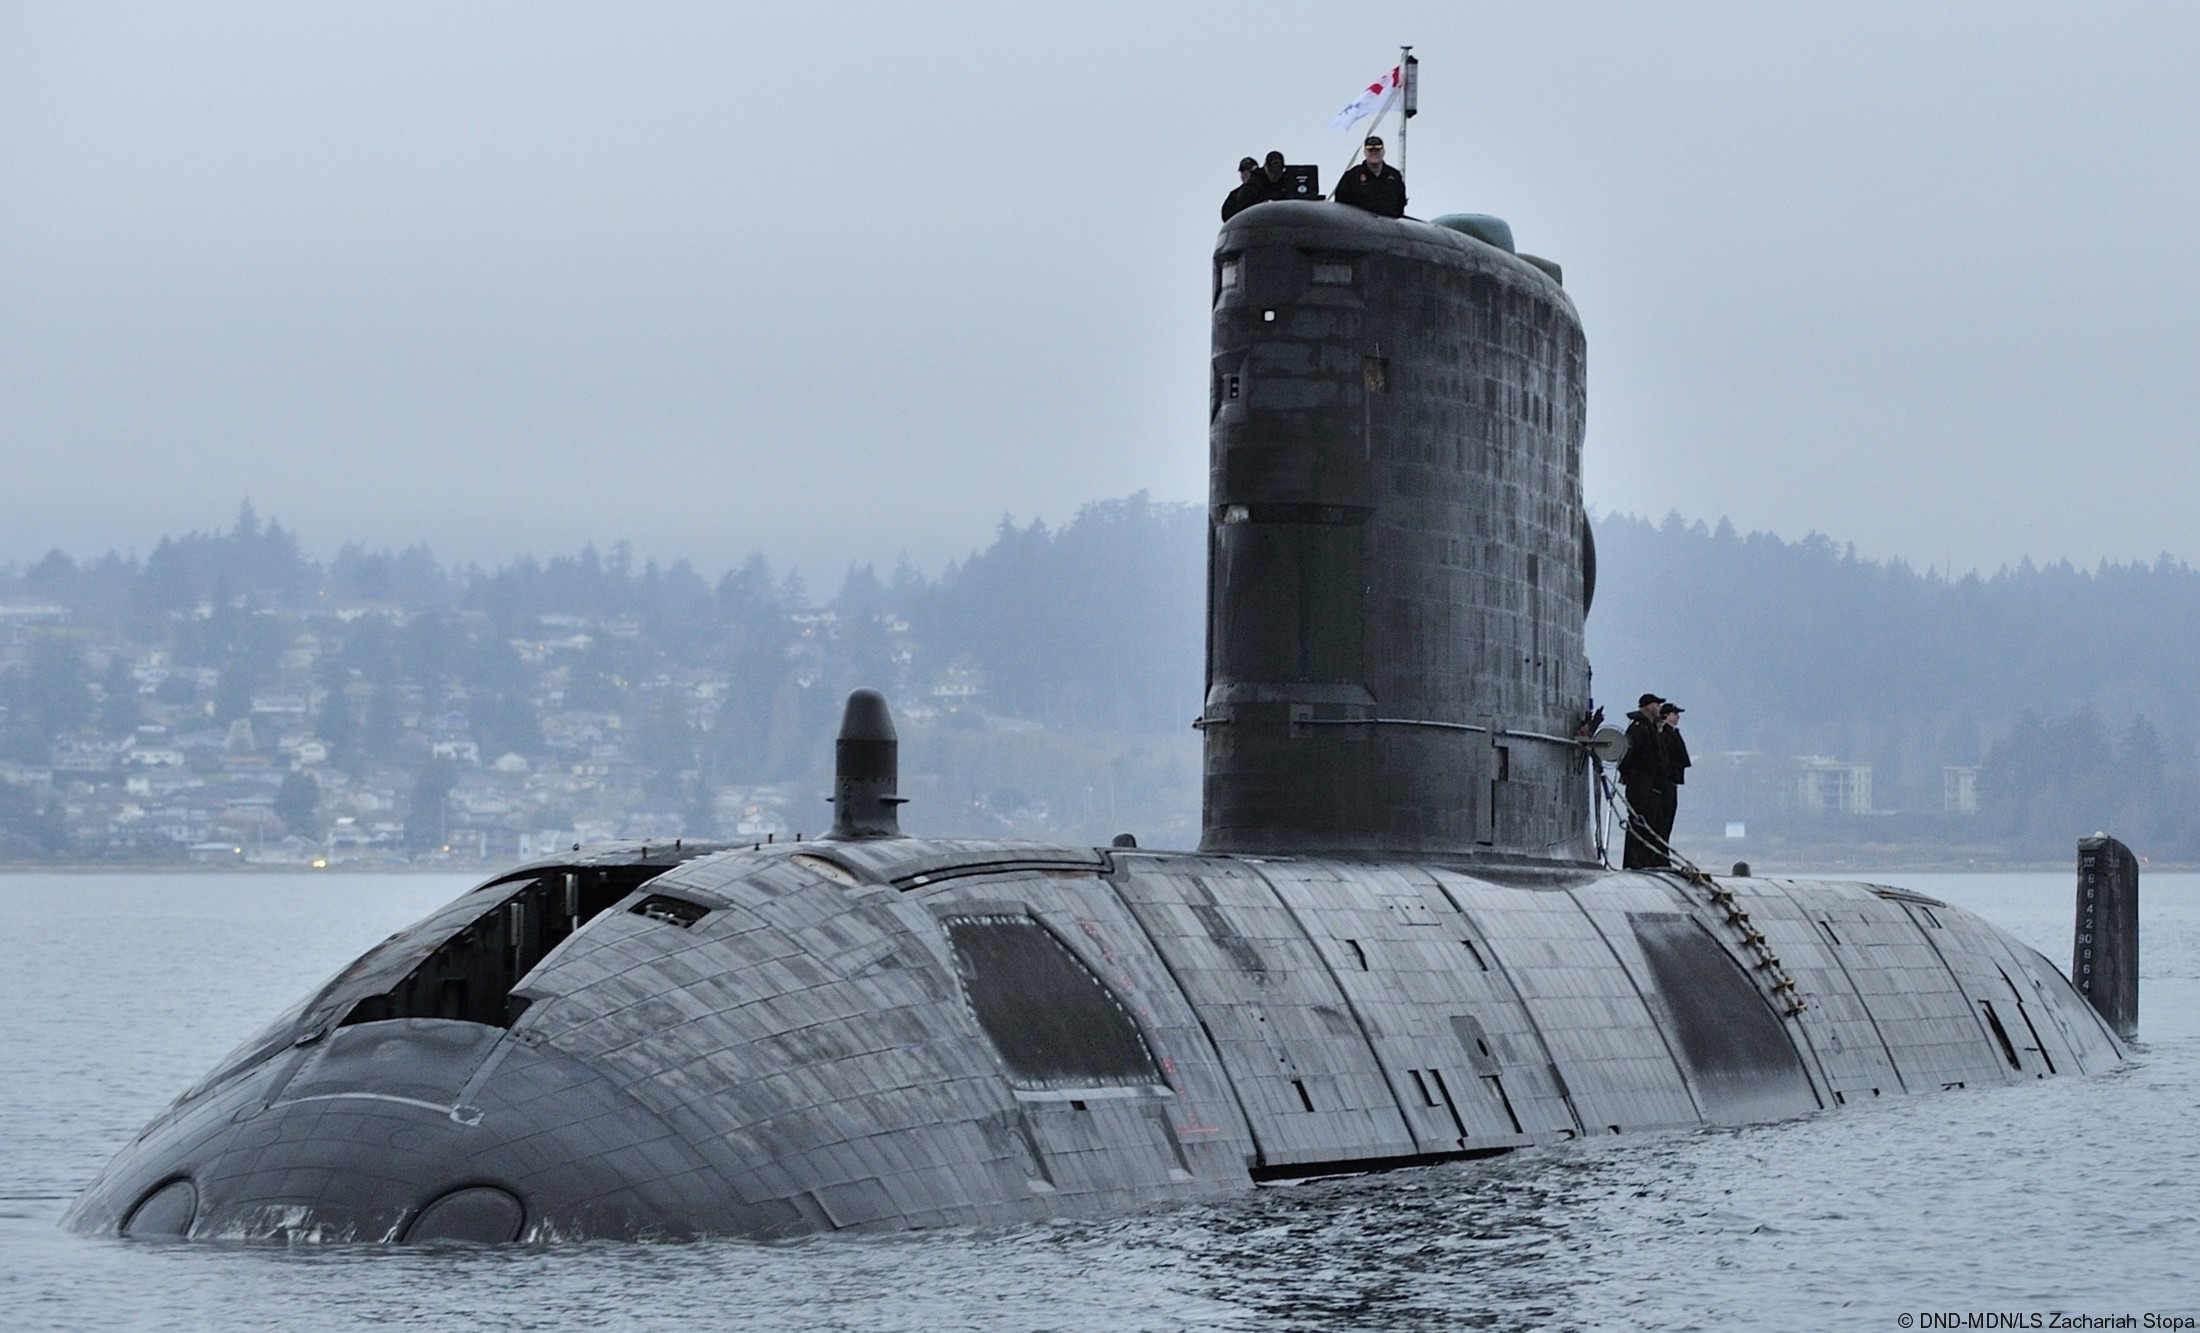 ssk-876 hmcs victoria upholder class attack submarine hunter killer ncsm royal canadian navy 20